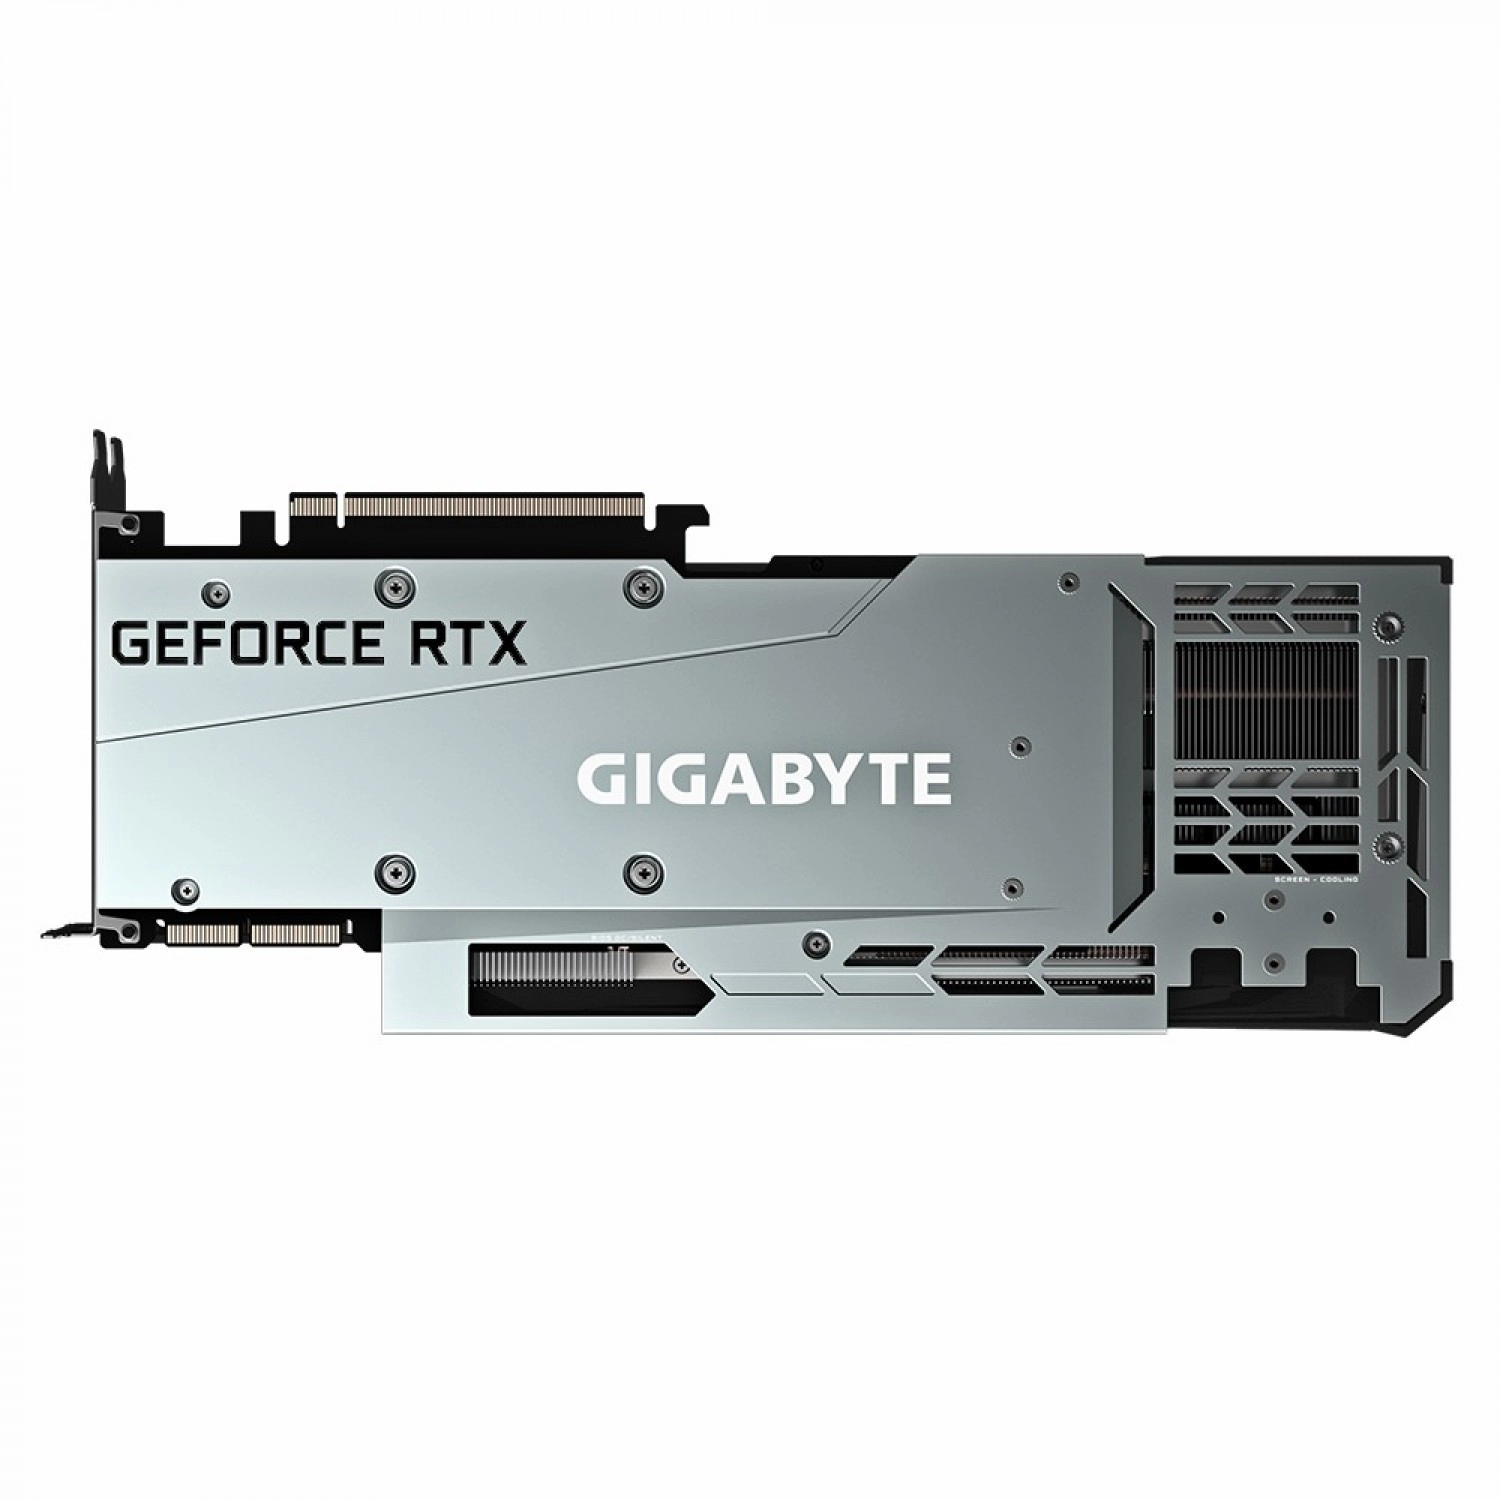 Gigabyte GeForce RTX 3090 GAMING OC 24G Back View